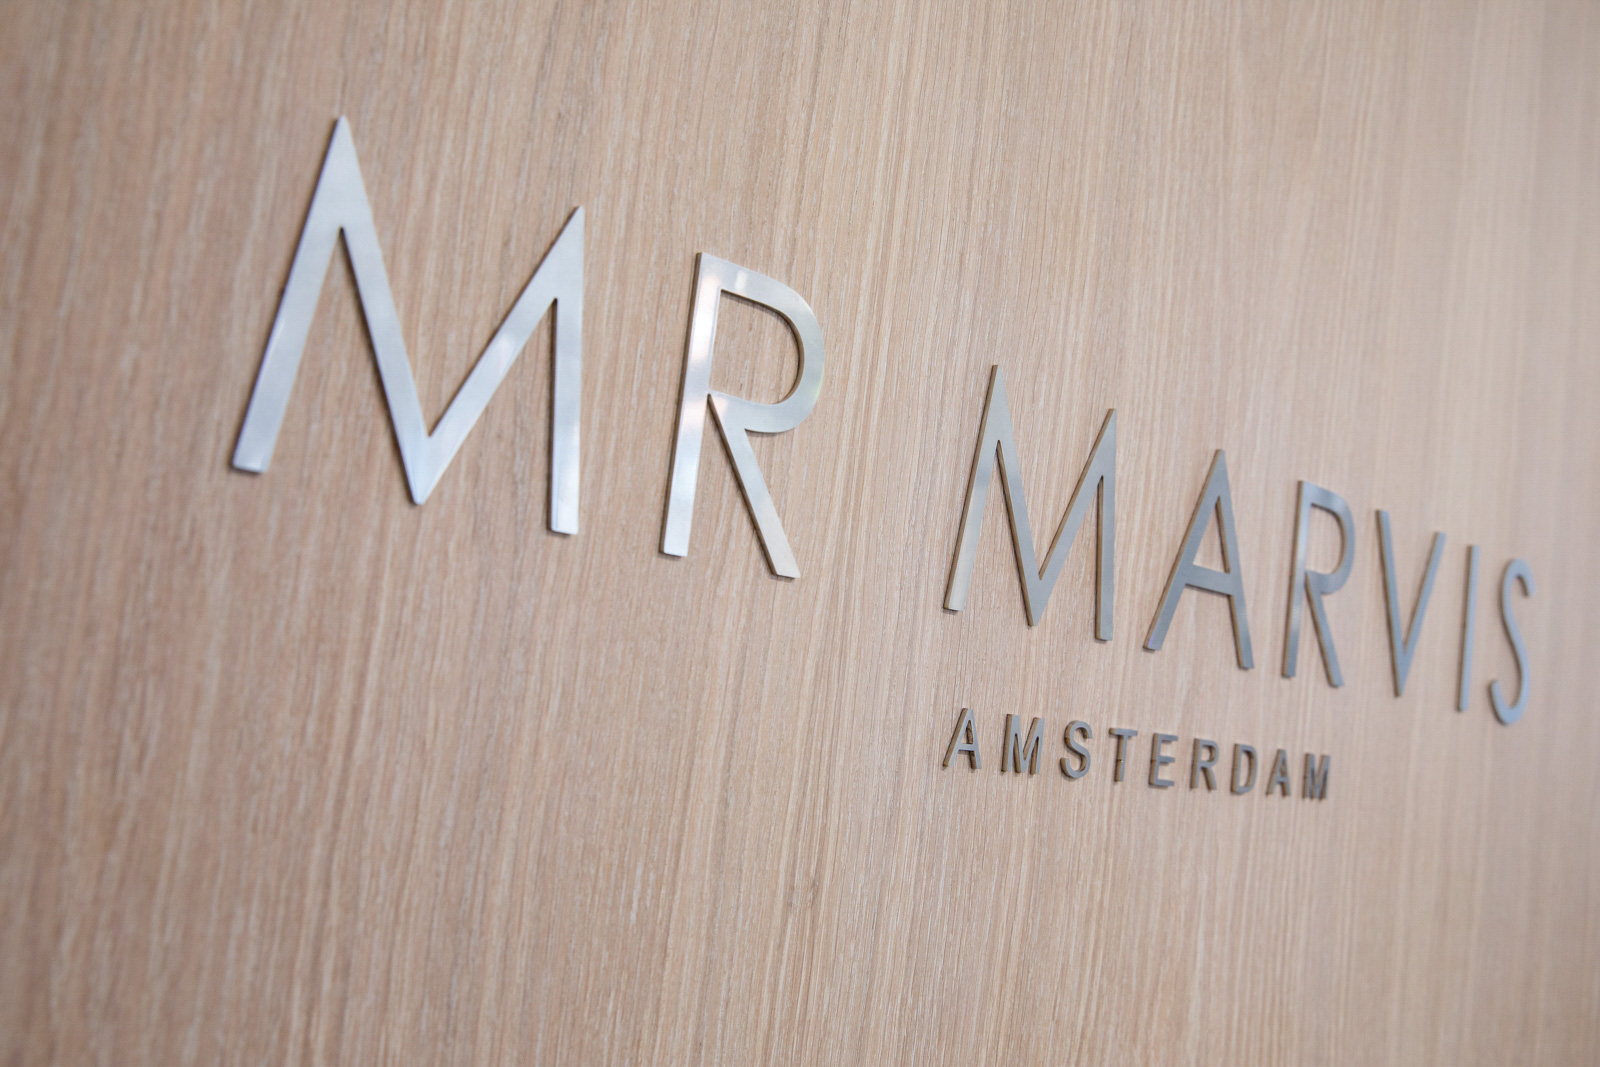 Mr Marvis Store Amsterdam by Standard Studio